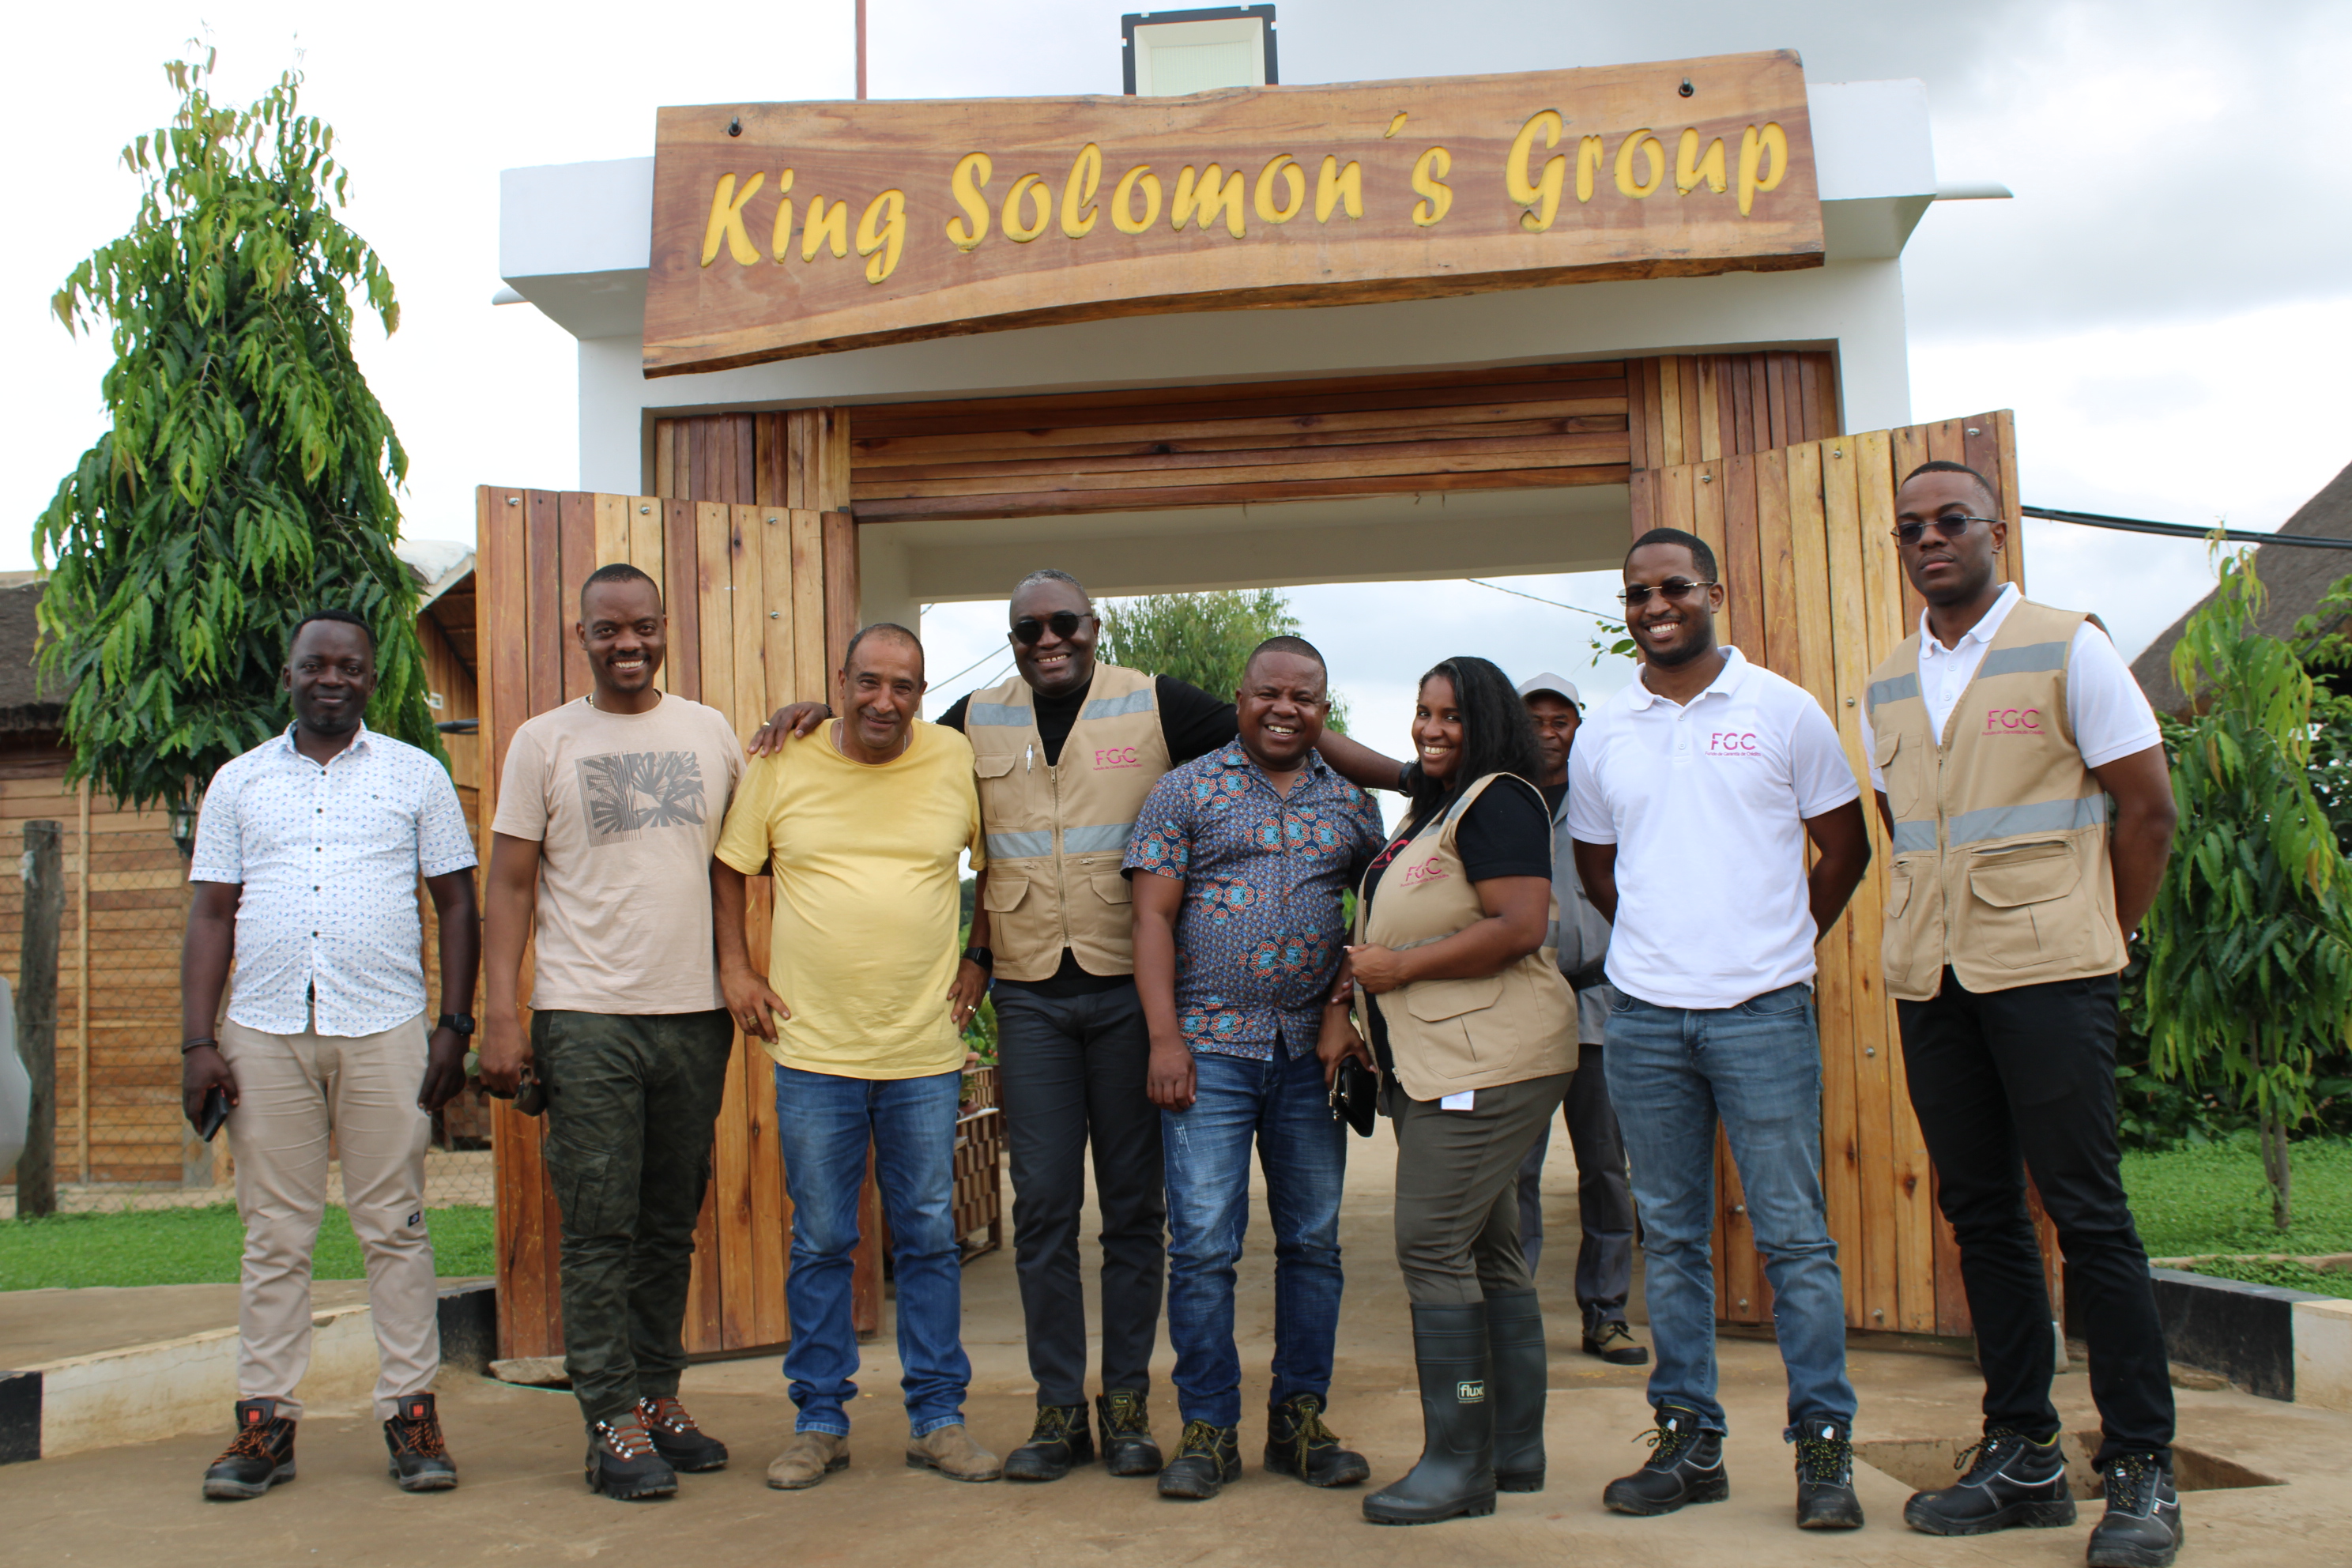 Projeto King Solomon Group recebe visita do FGC